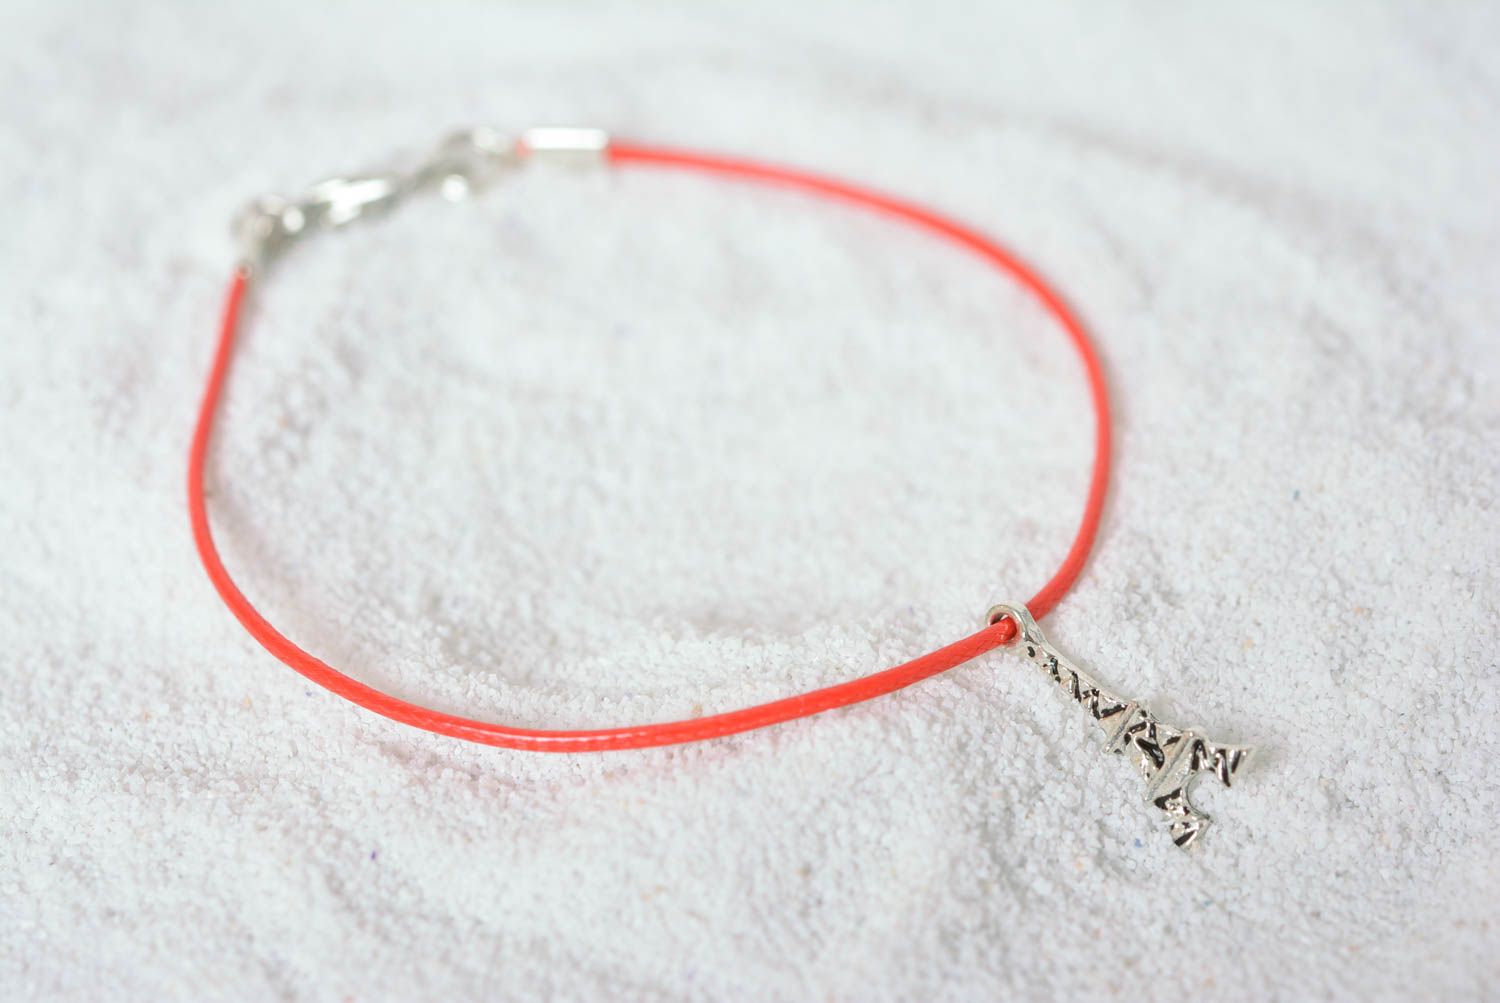 Handmade bracelet designer jewelry cord bracelet women accessories gifts for her photo 1